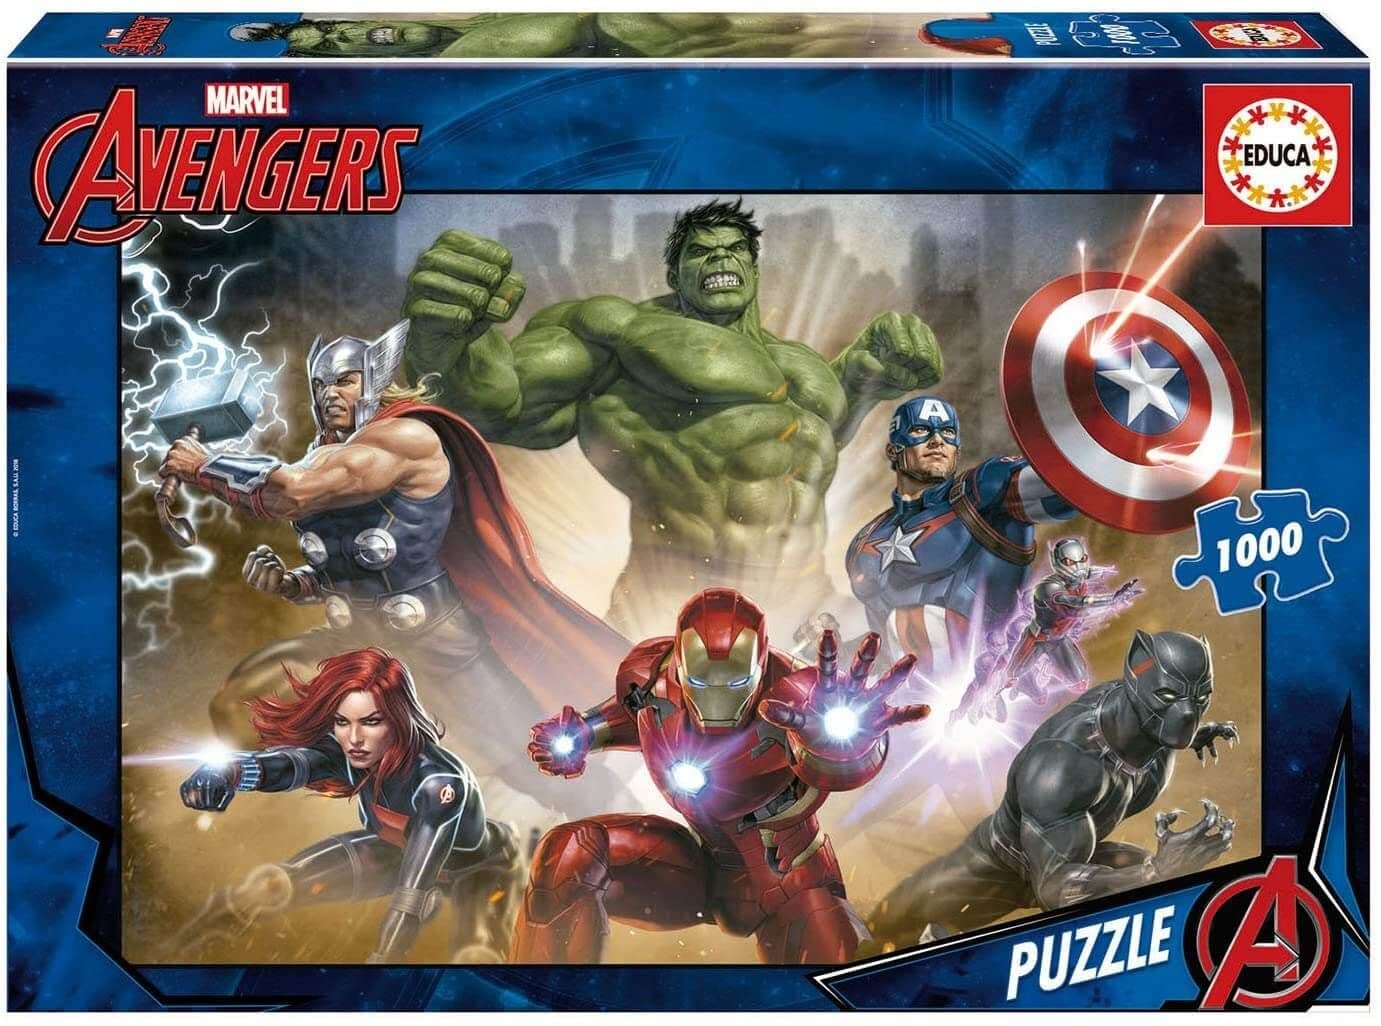 Educa - Marvel Avengers - 1000 Piece Jigsaw Puzzles